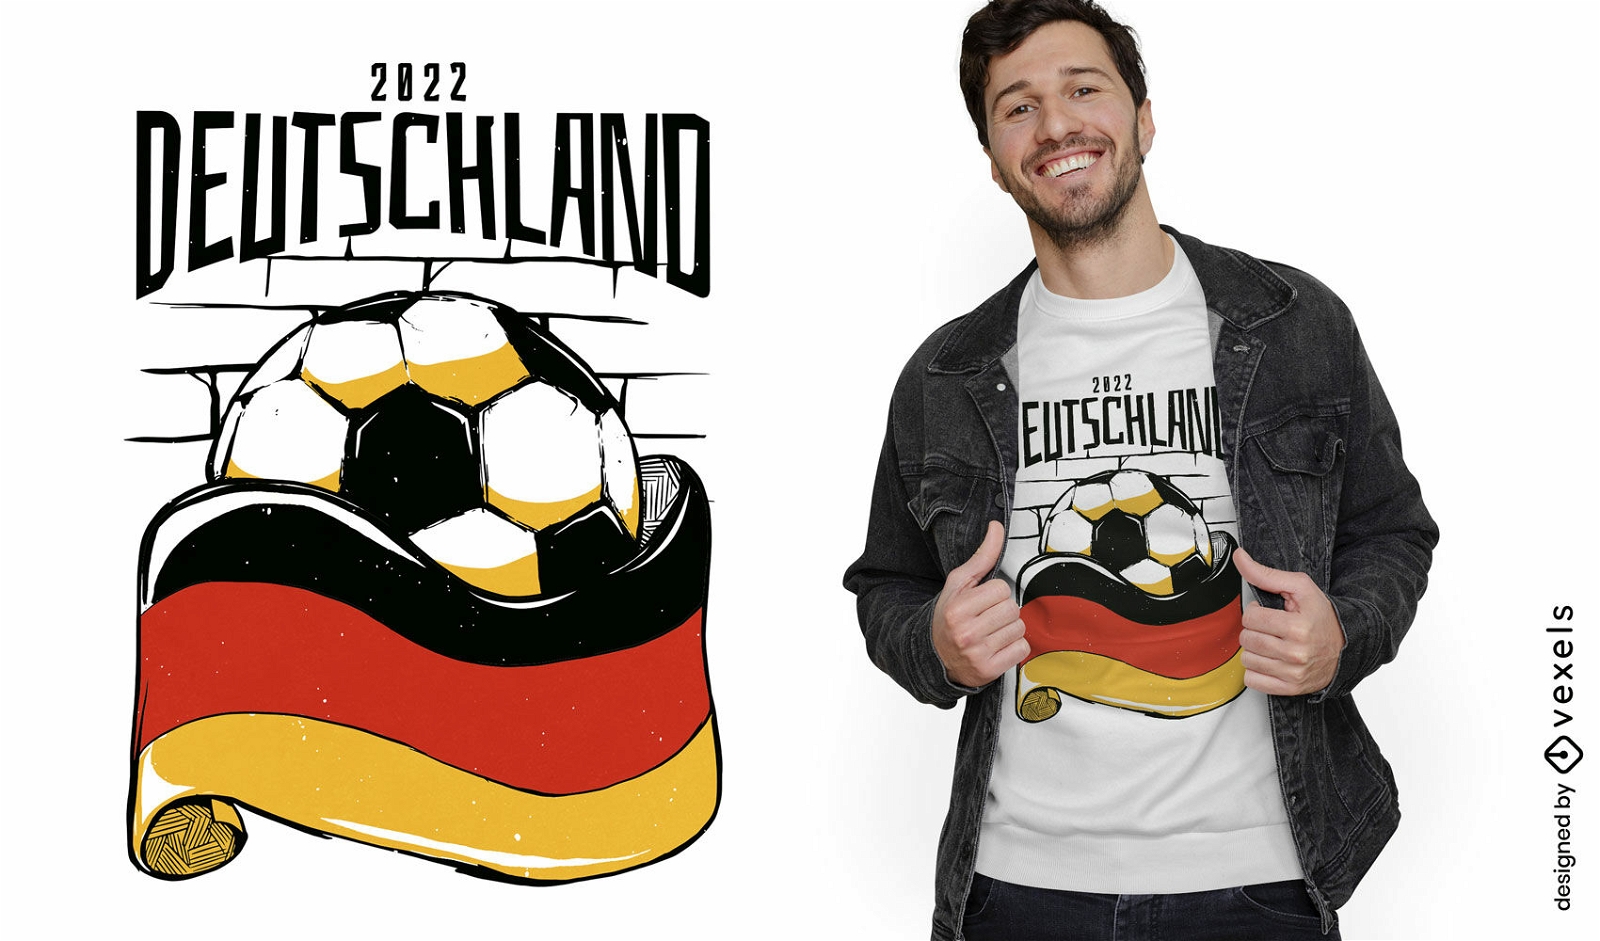 Deutschland Germany soccer t-shirt design